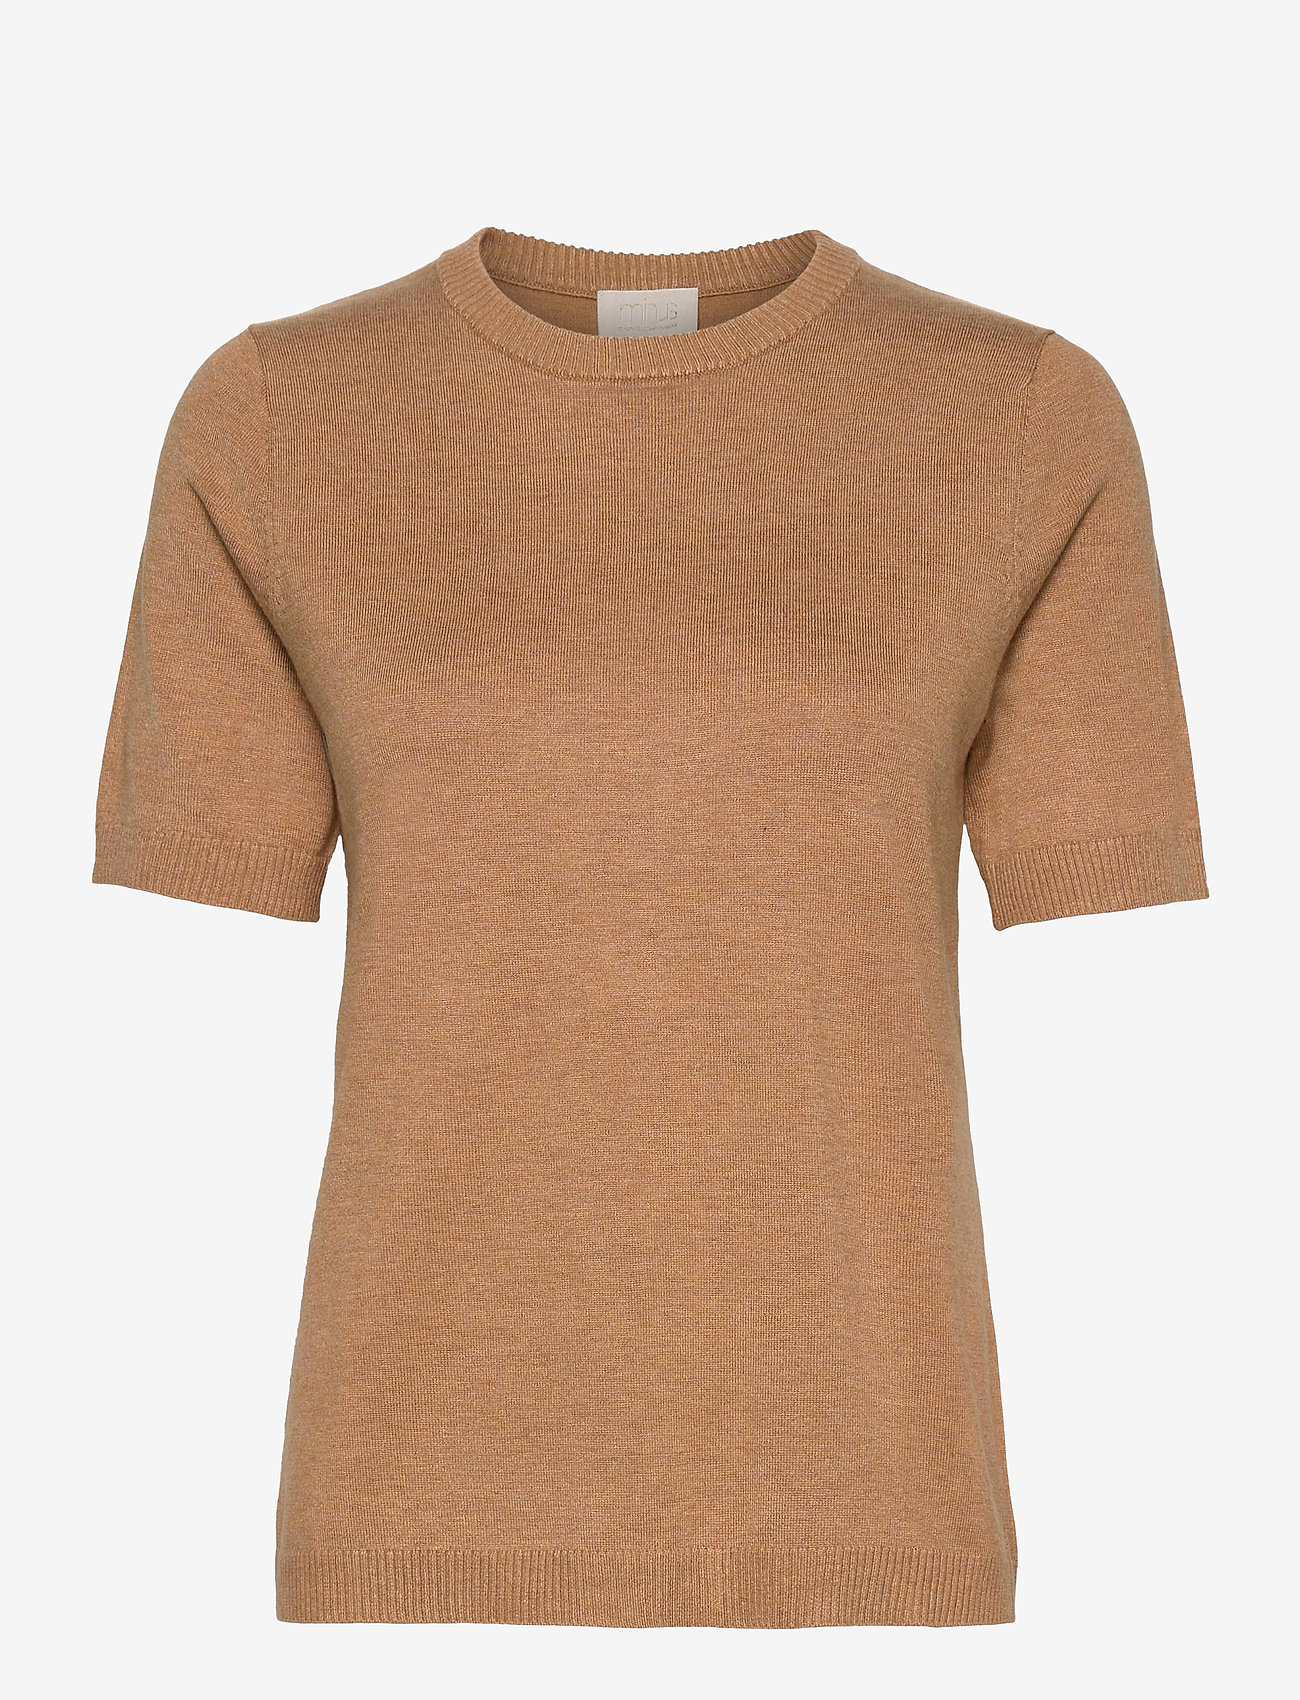 Minus - Pamela Strik T-shirt - pulls - almond melange - 0